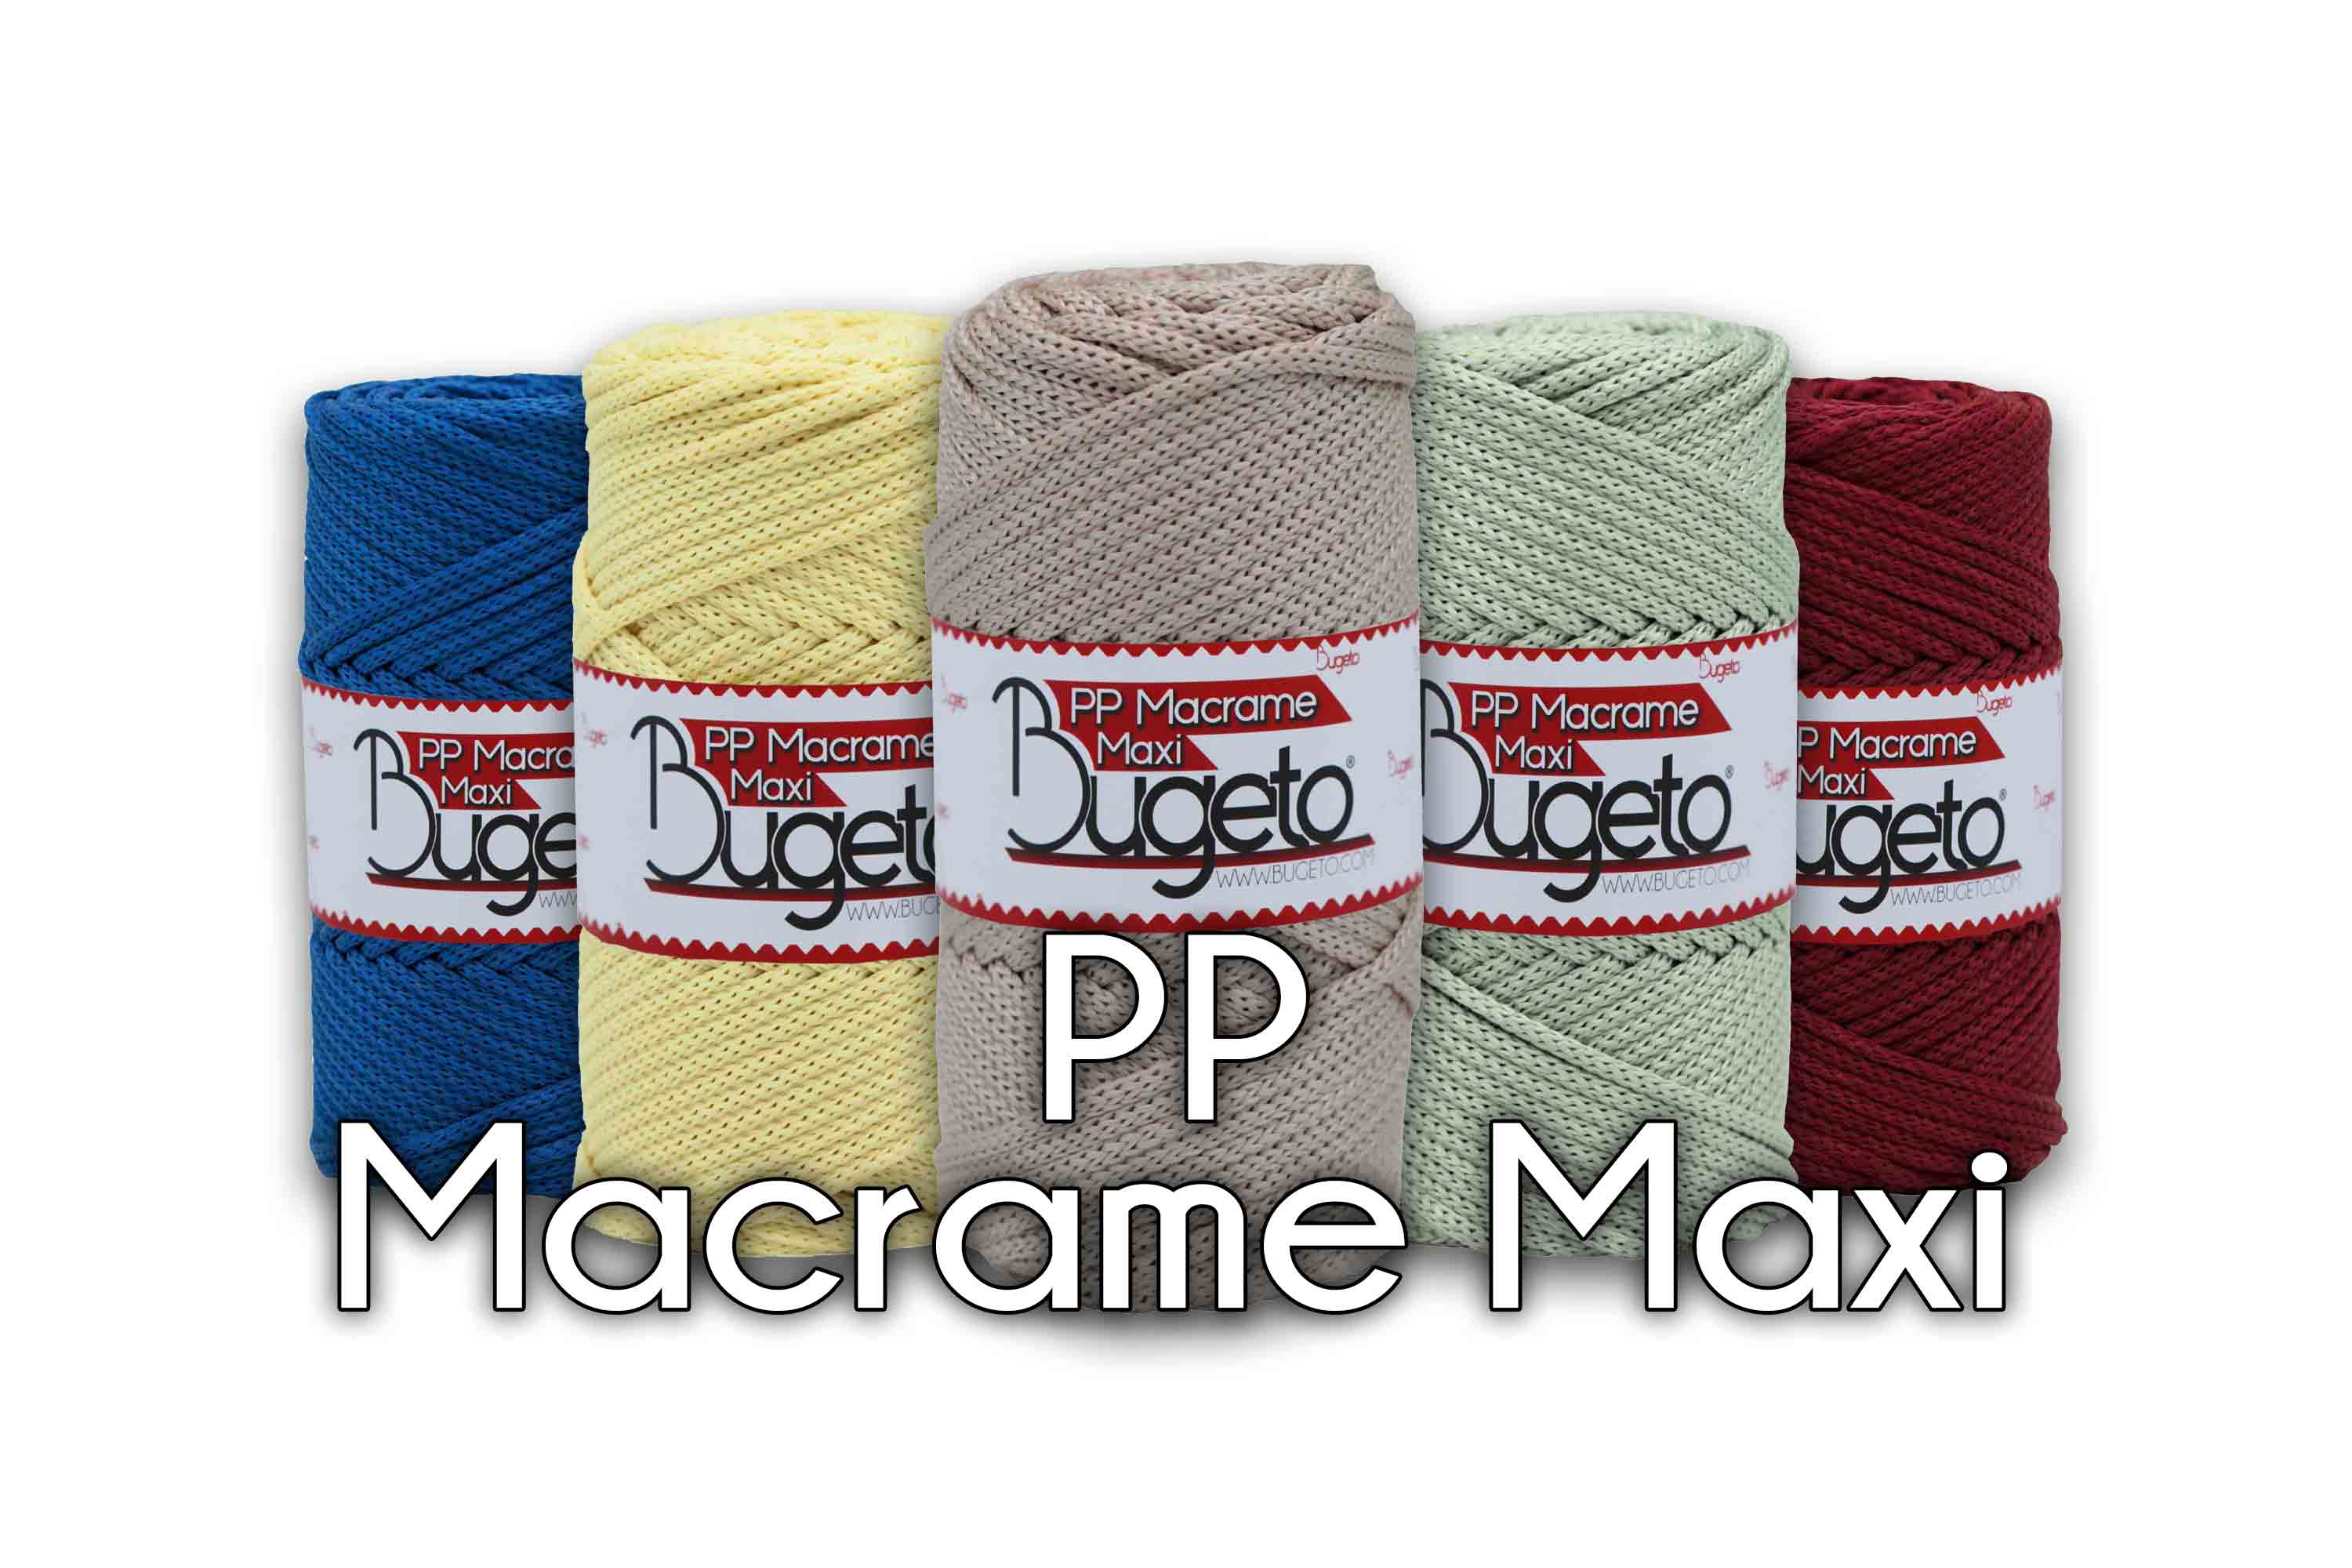 maxi pp polyproplene xlarge pp yarn yarns bugeto yarn